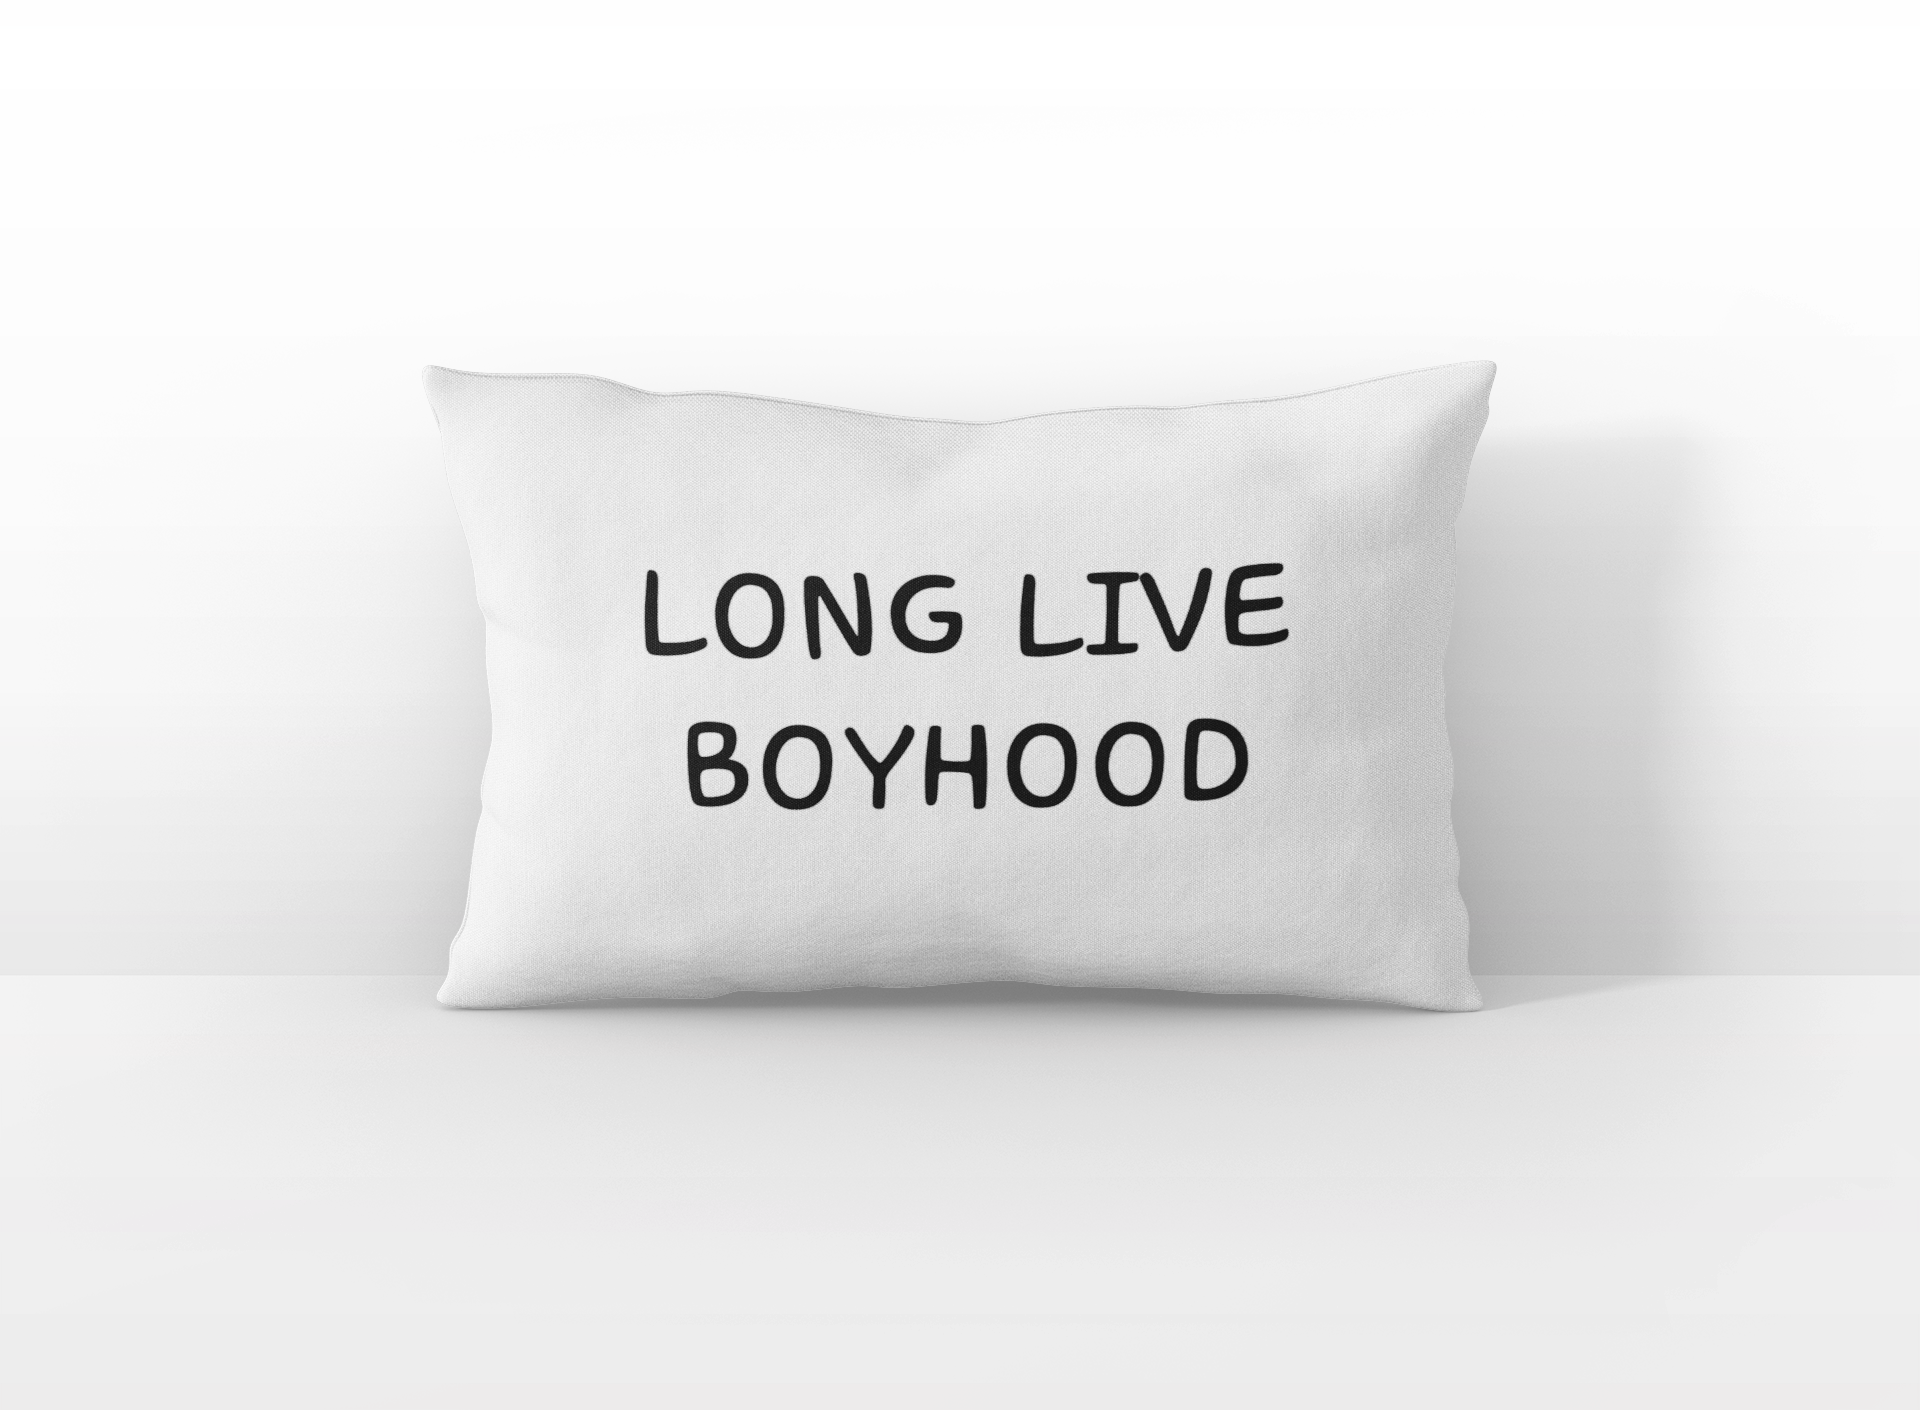 long live boyhood pillow 